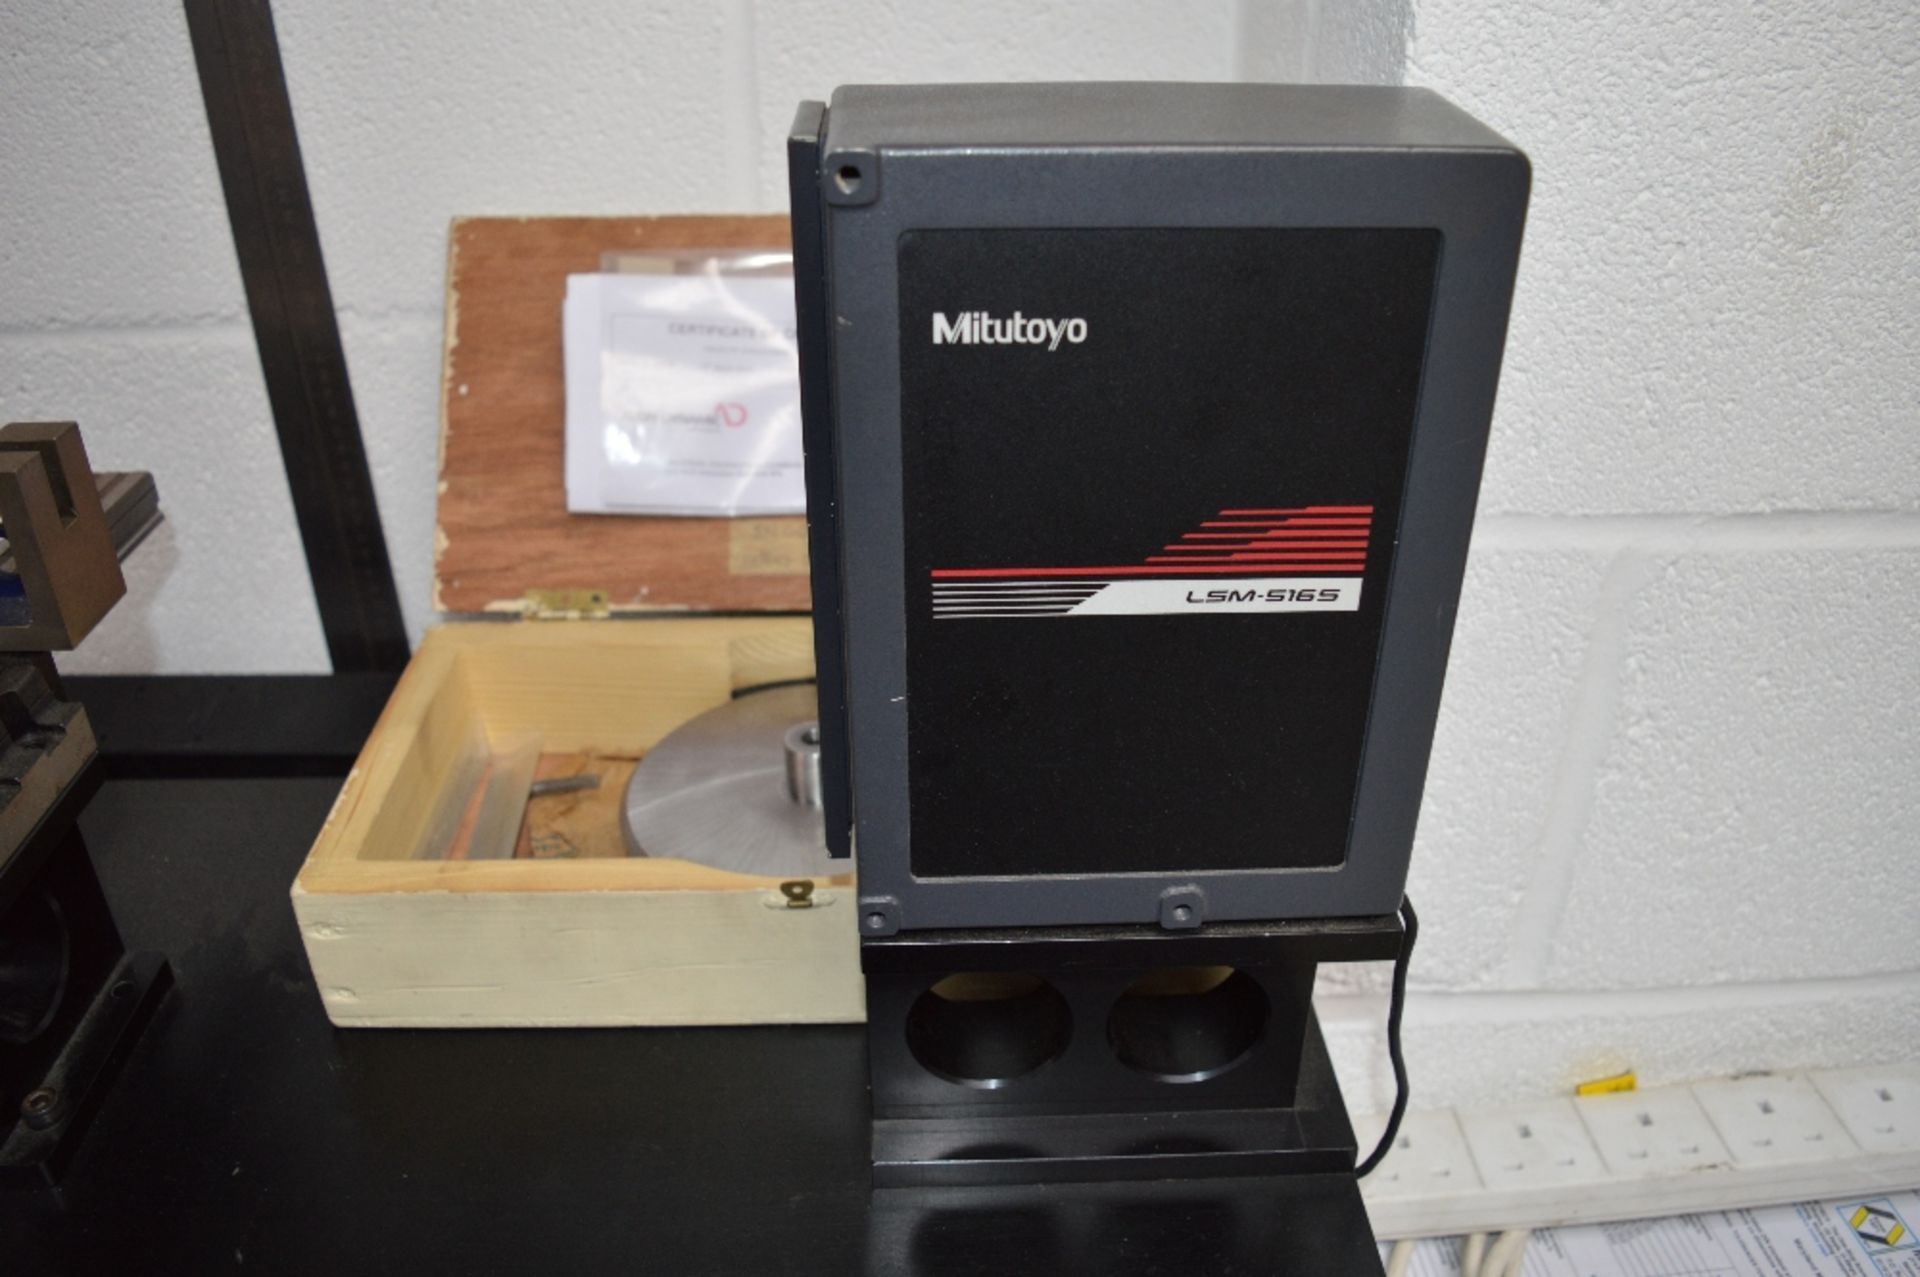 Mitutoyo LSM-516 S laser scan micrometer
Serial no - Image 5 of 5